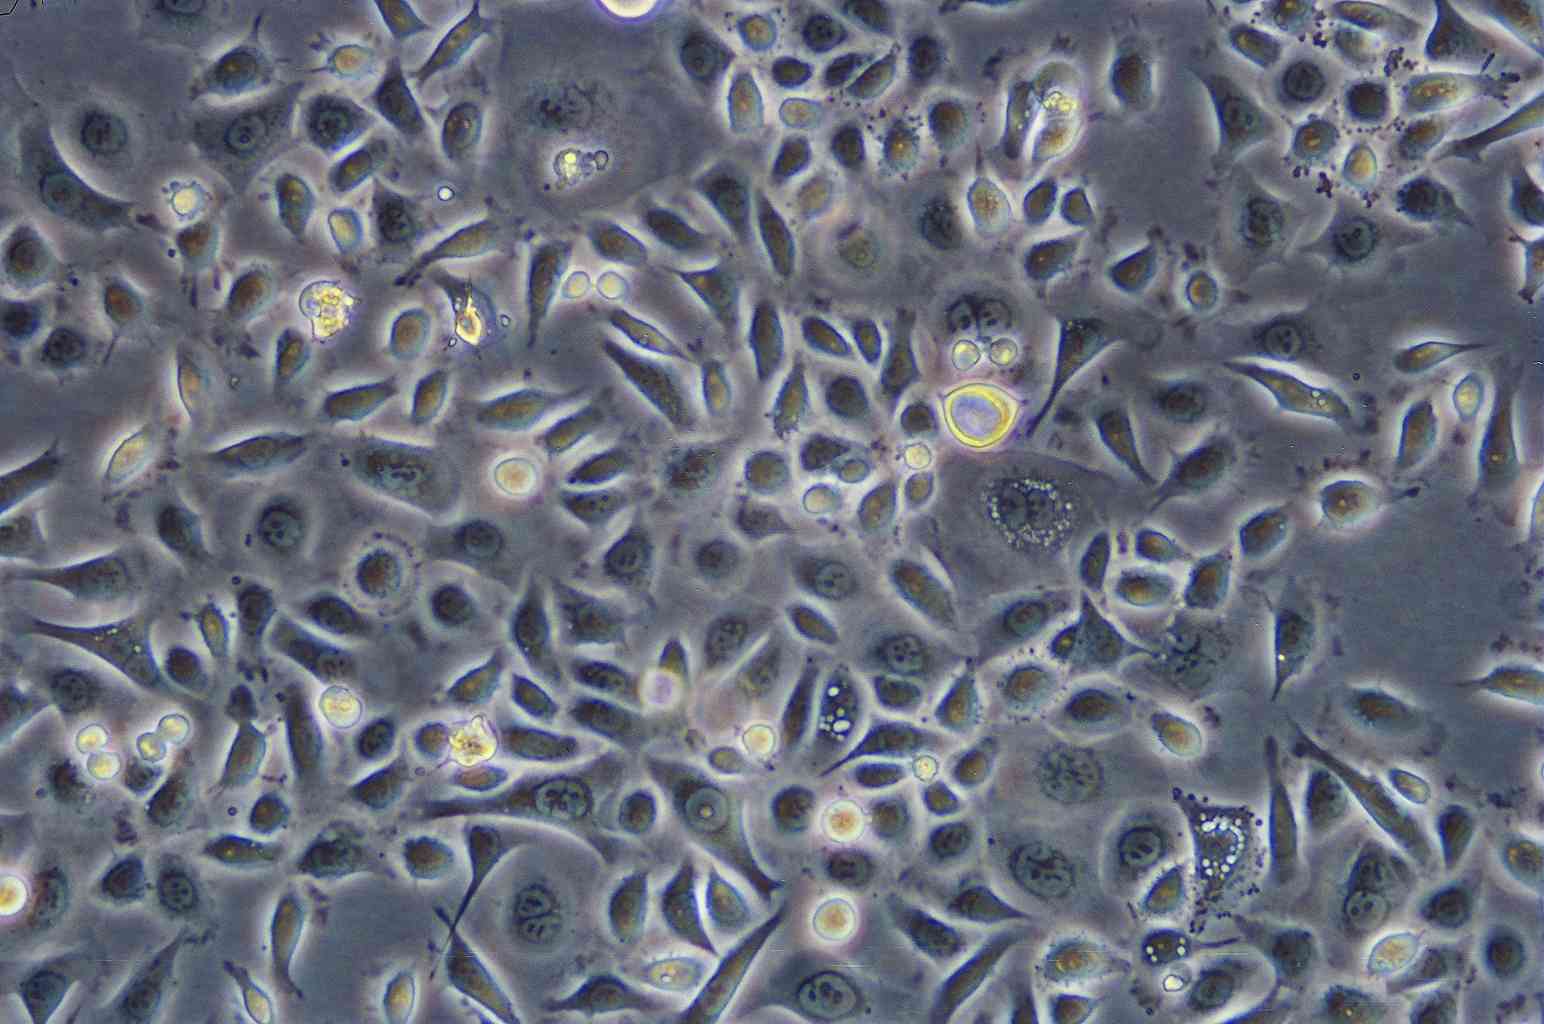 VP267 Adherent人乳腺癌细胞系